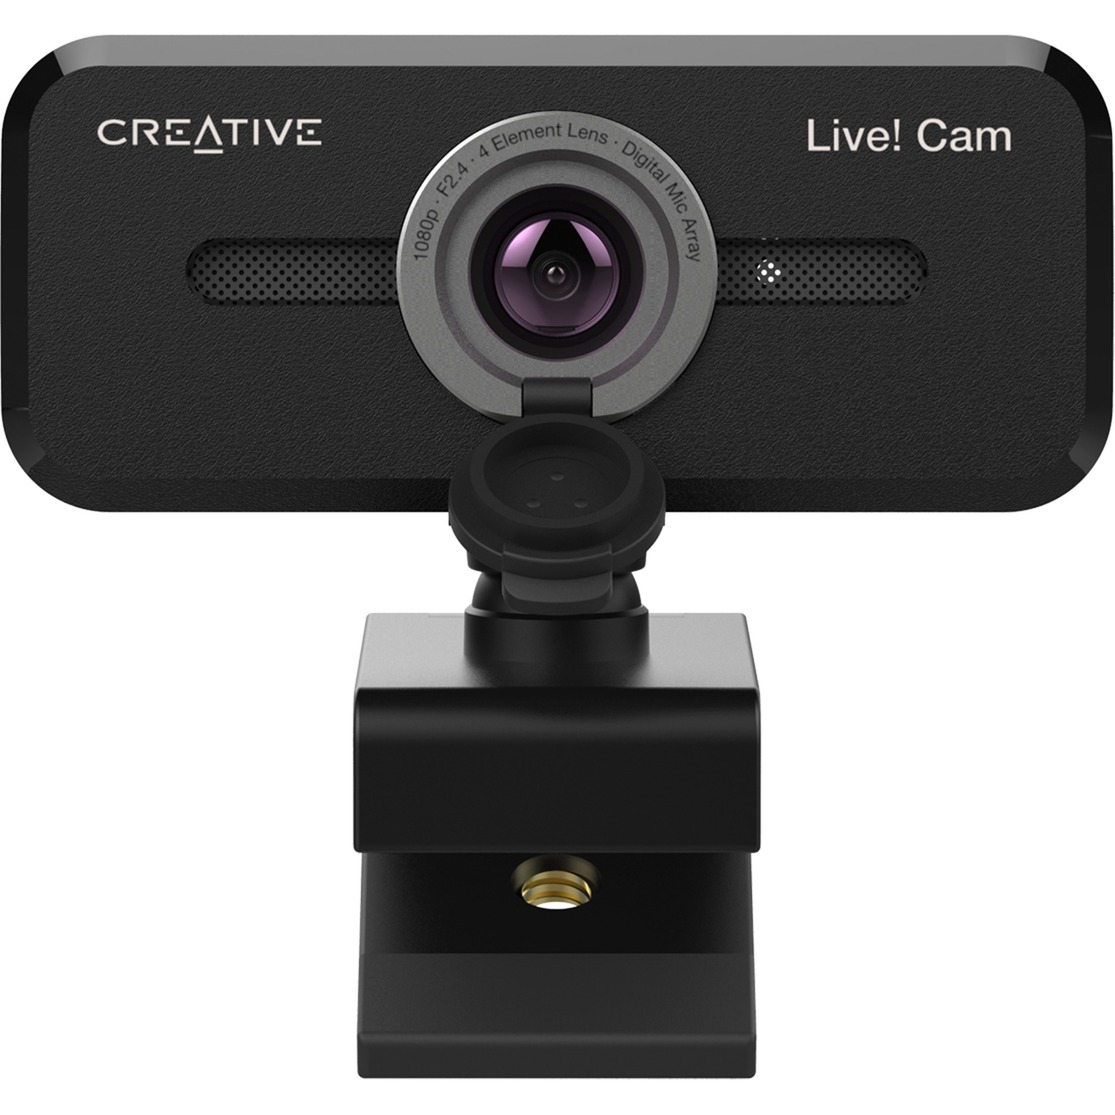 Image of Alternate - Live! Cam Sync 1080p V2, Webcam online einkaufen bei Alternate